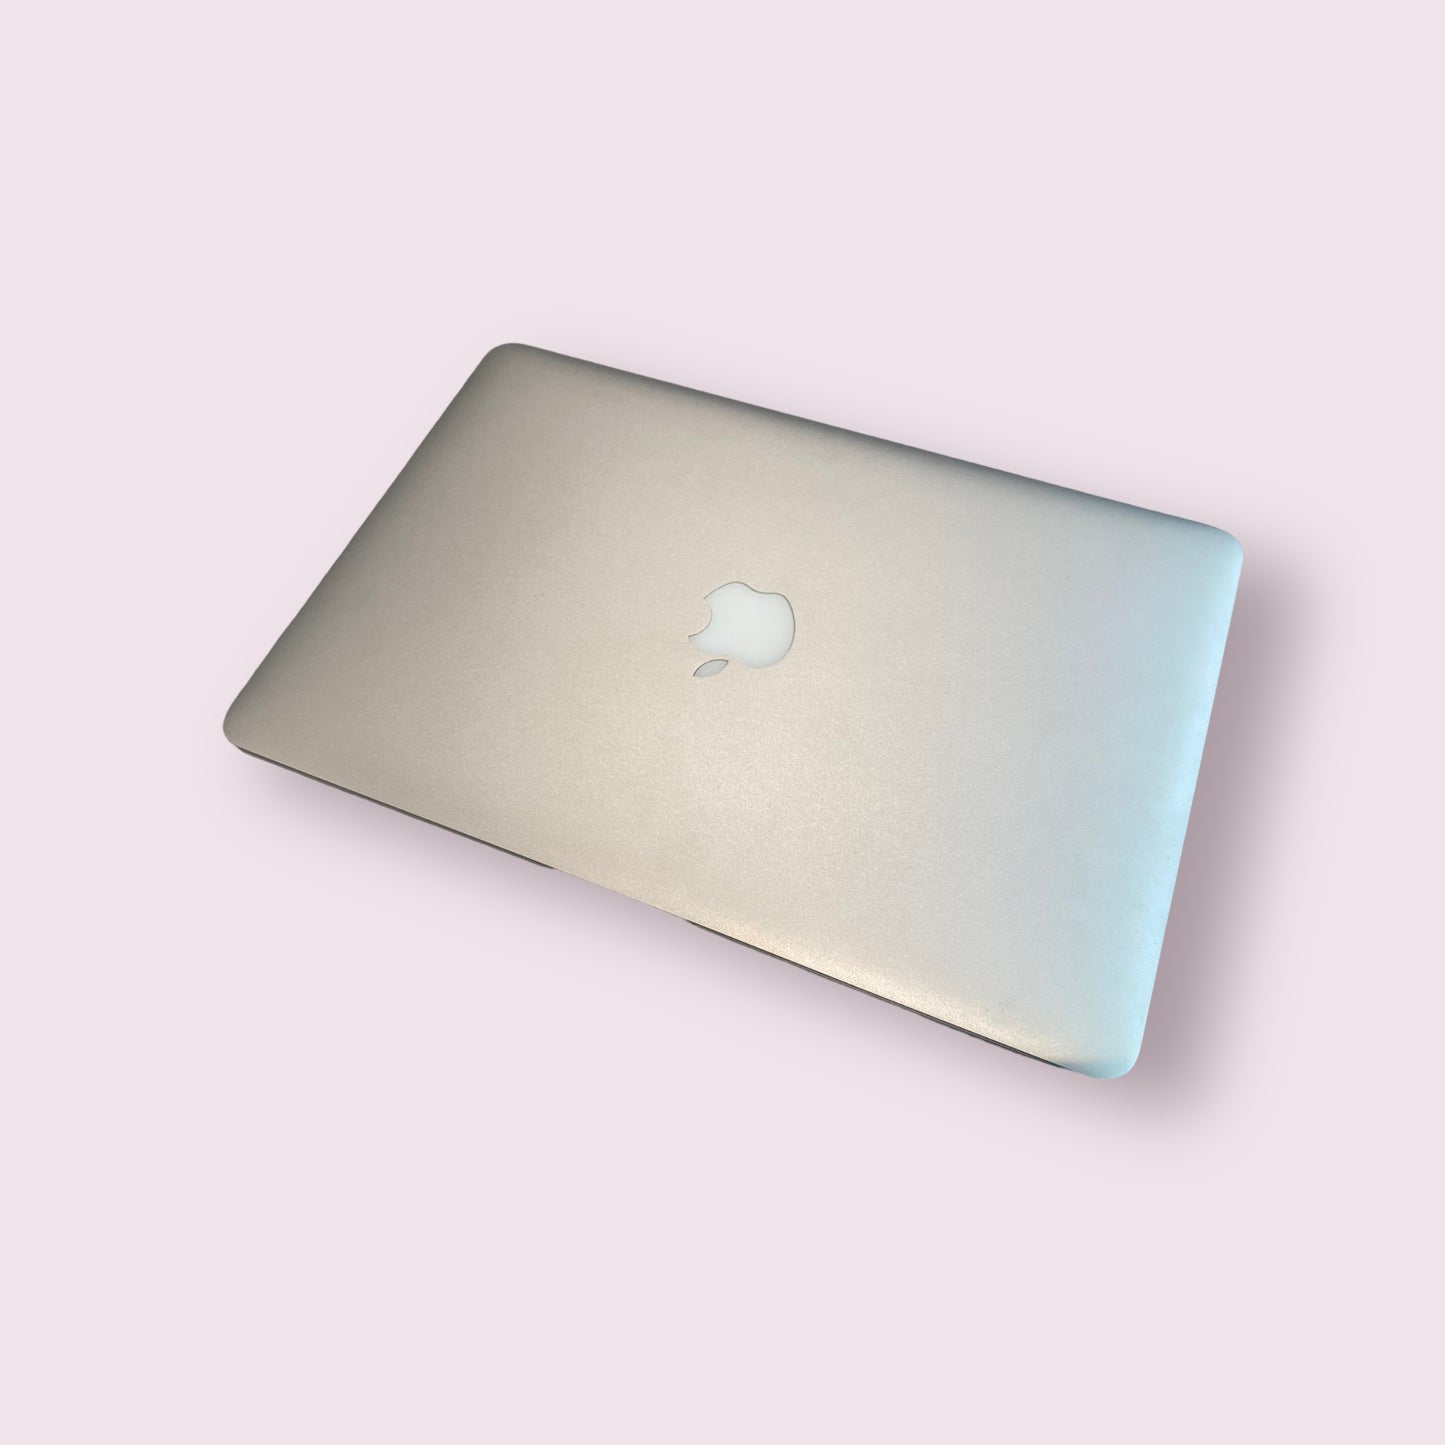 Apple Macbook air 13" A1466 2017 - 8gb RAM, i7, 128gb SSD, Mac OS Catalina